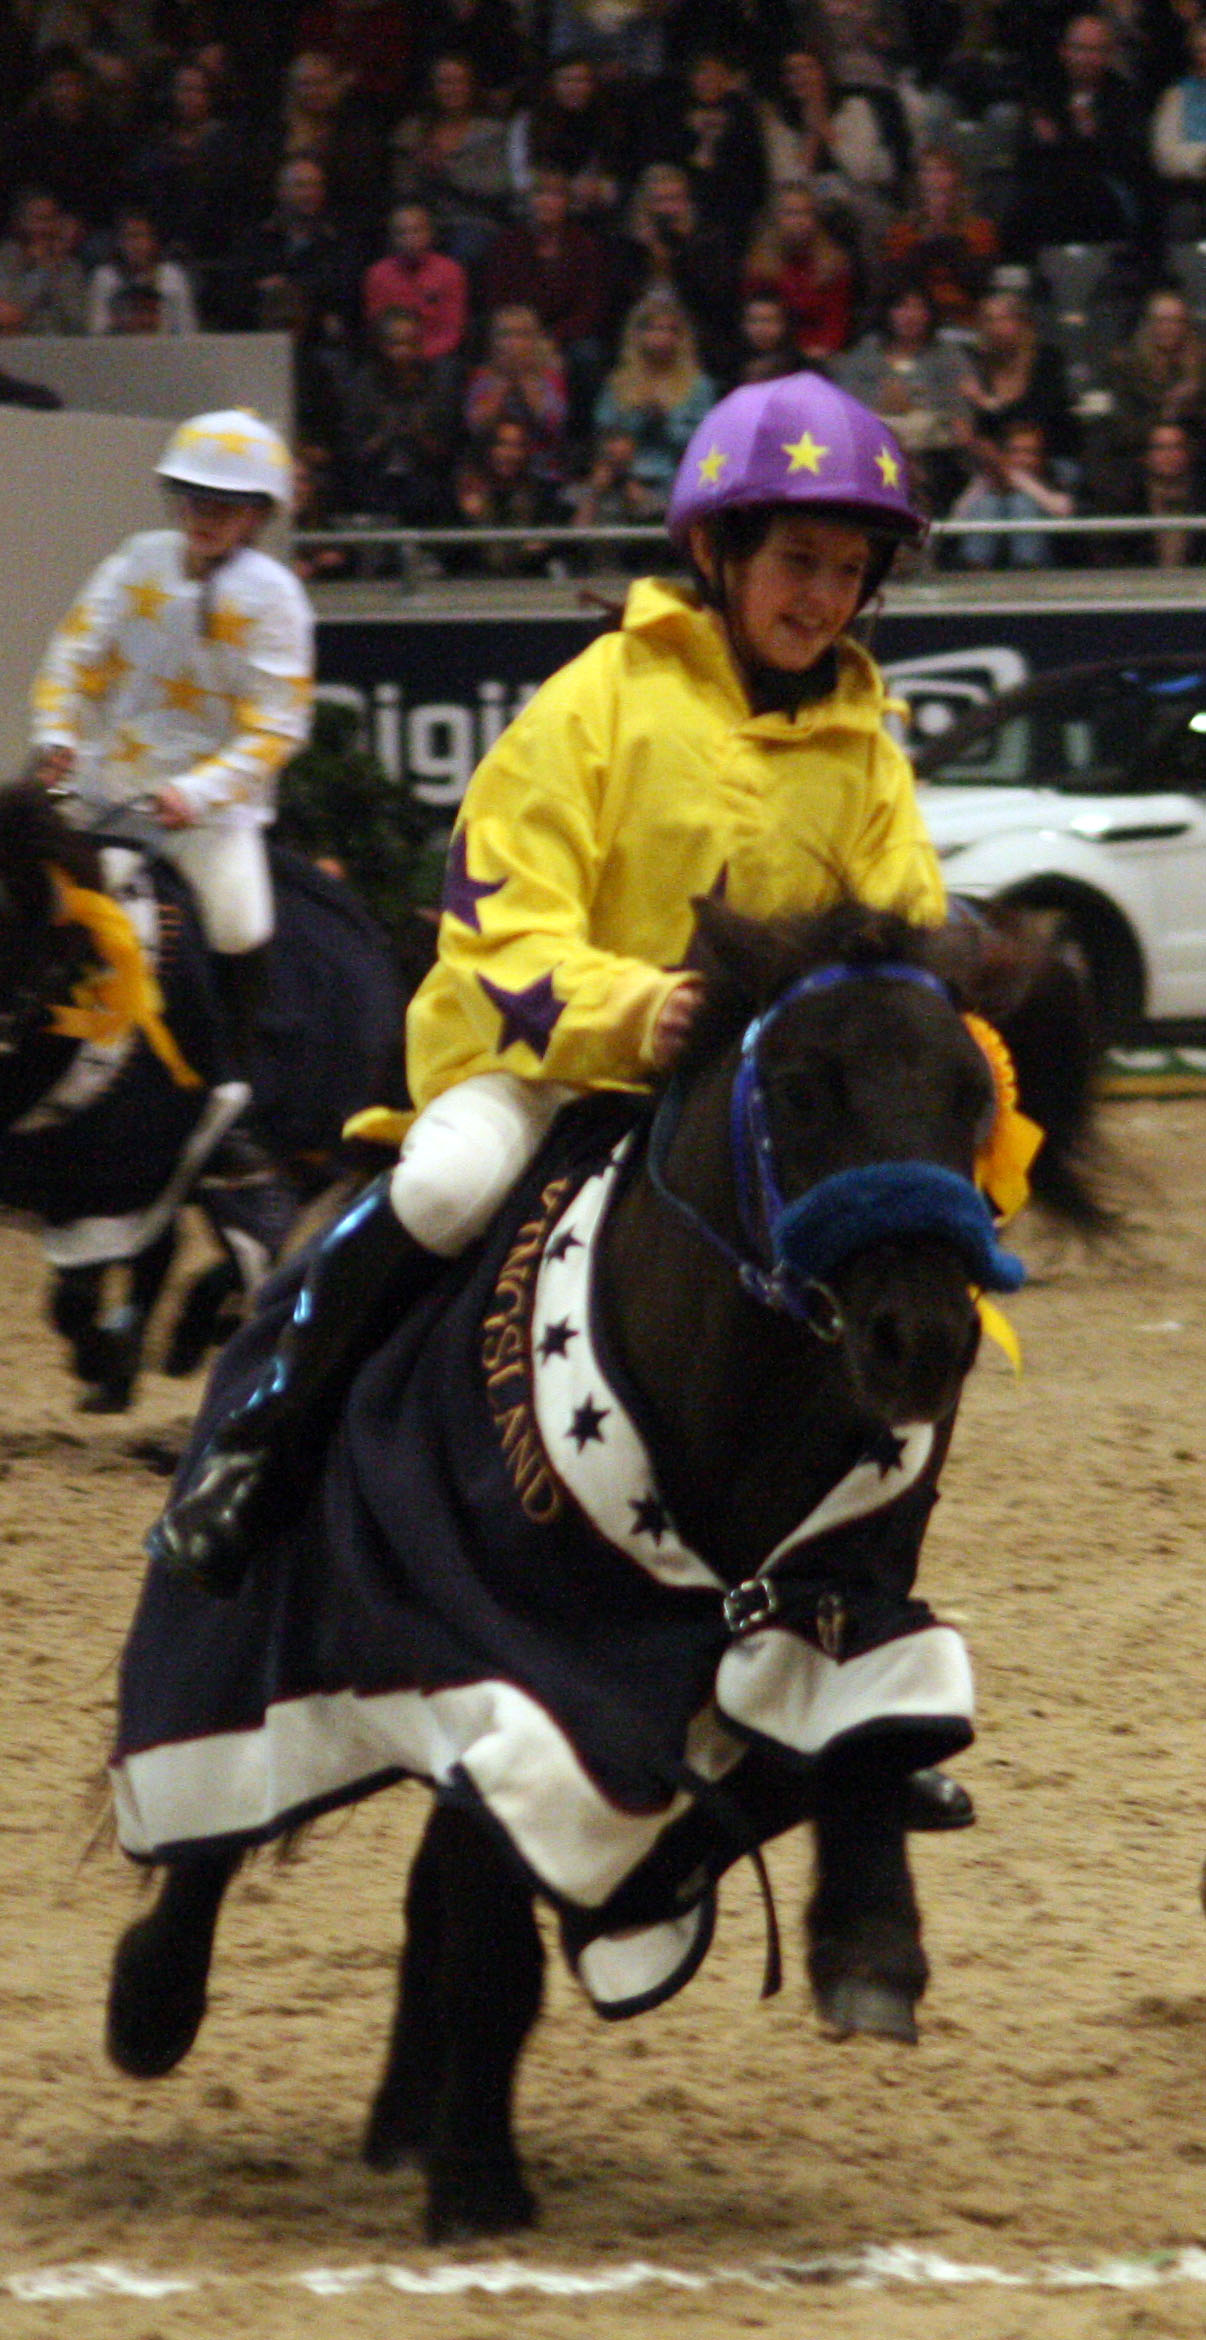 Oslo Horse Show 2011 Program